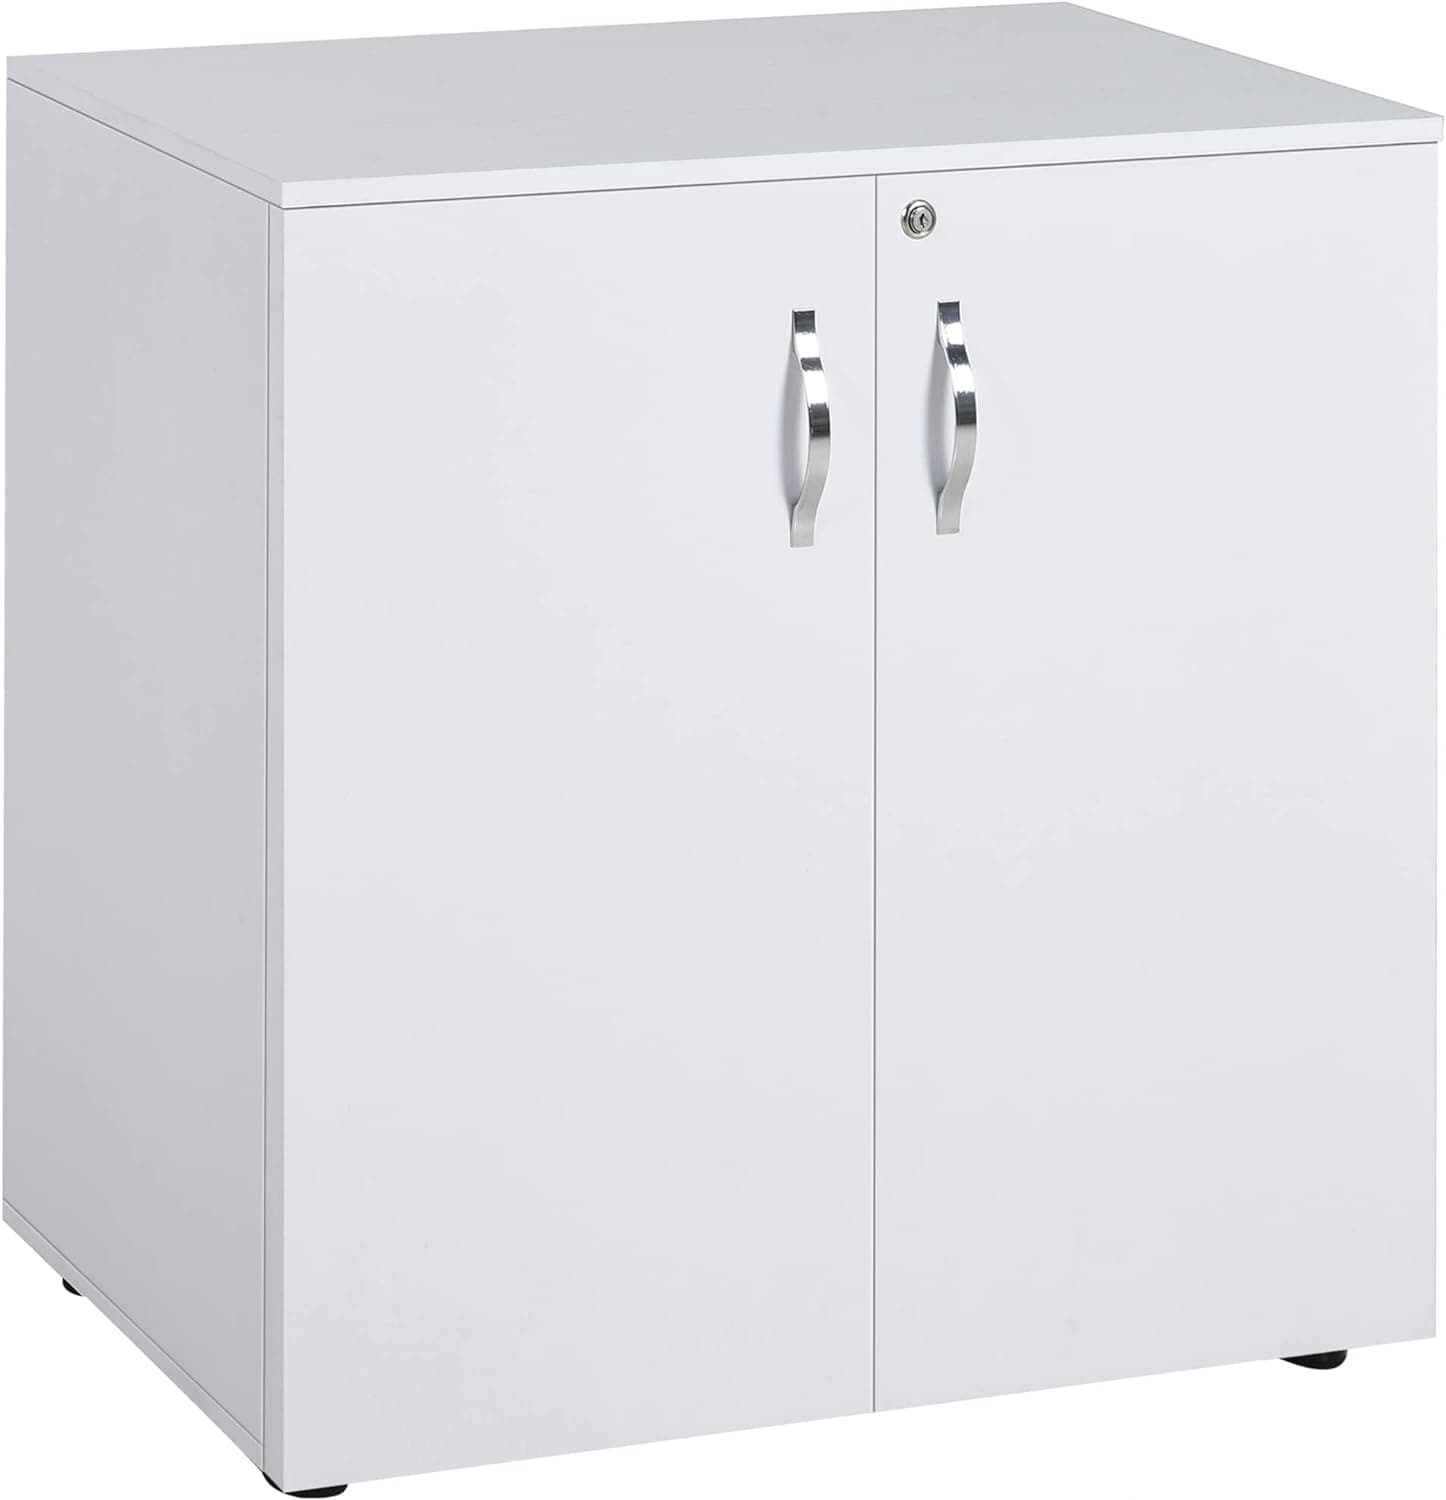 ProperAV Extra Lockable 2-Tier Storage Filing Cabinet (White)